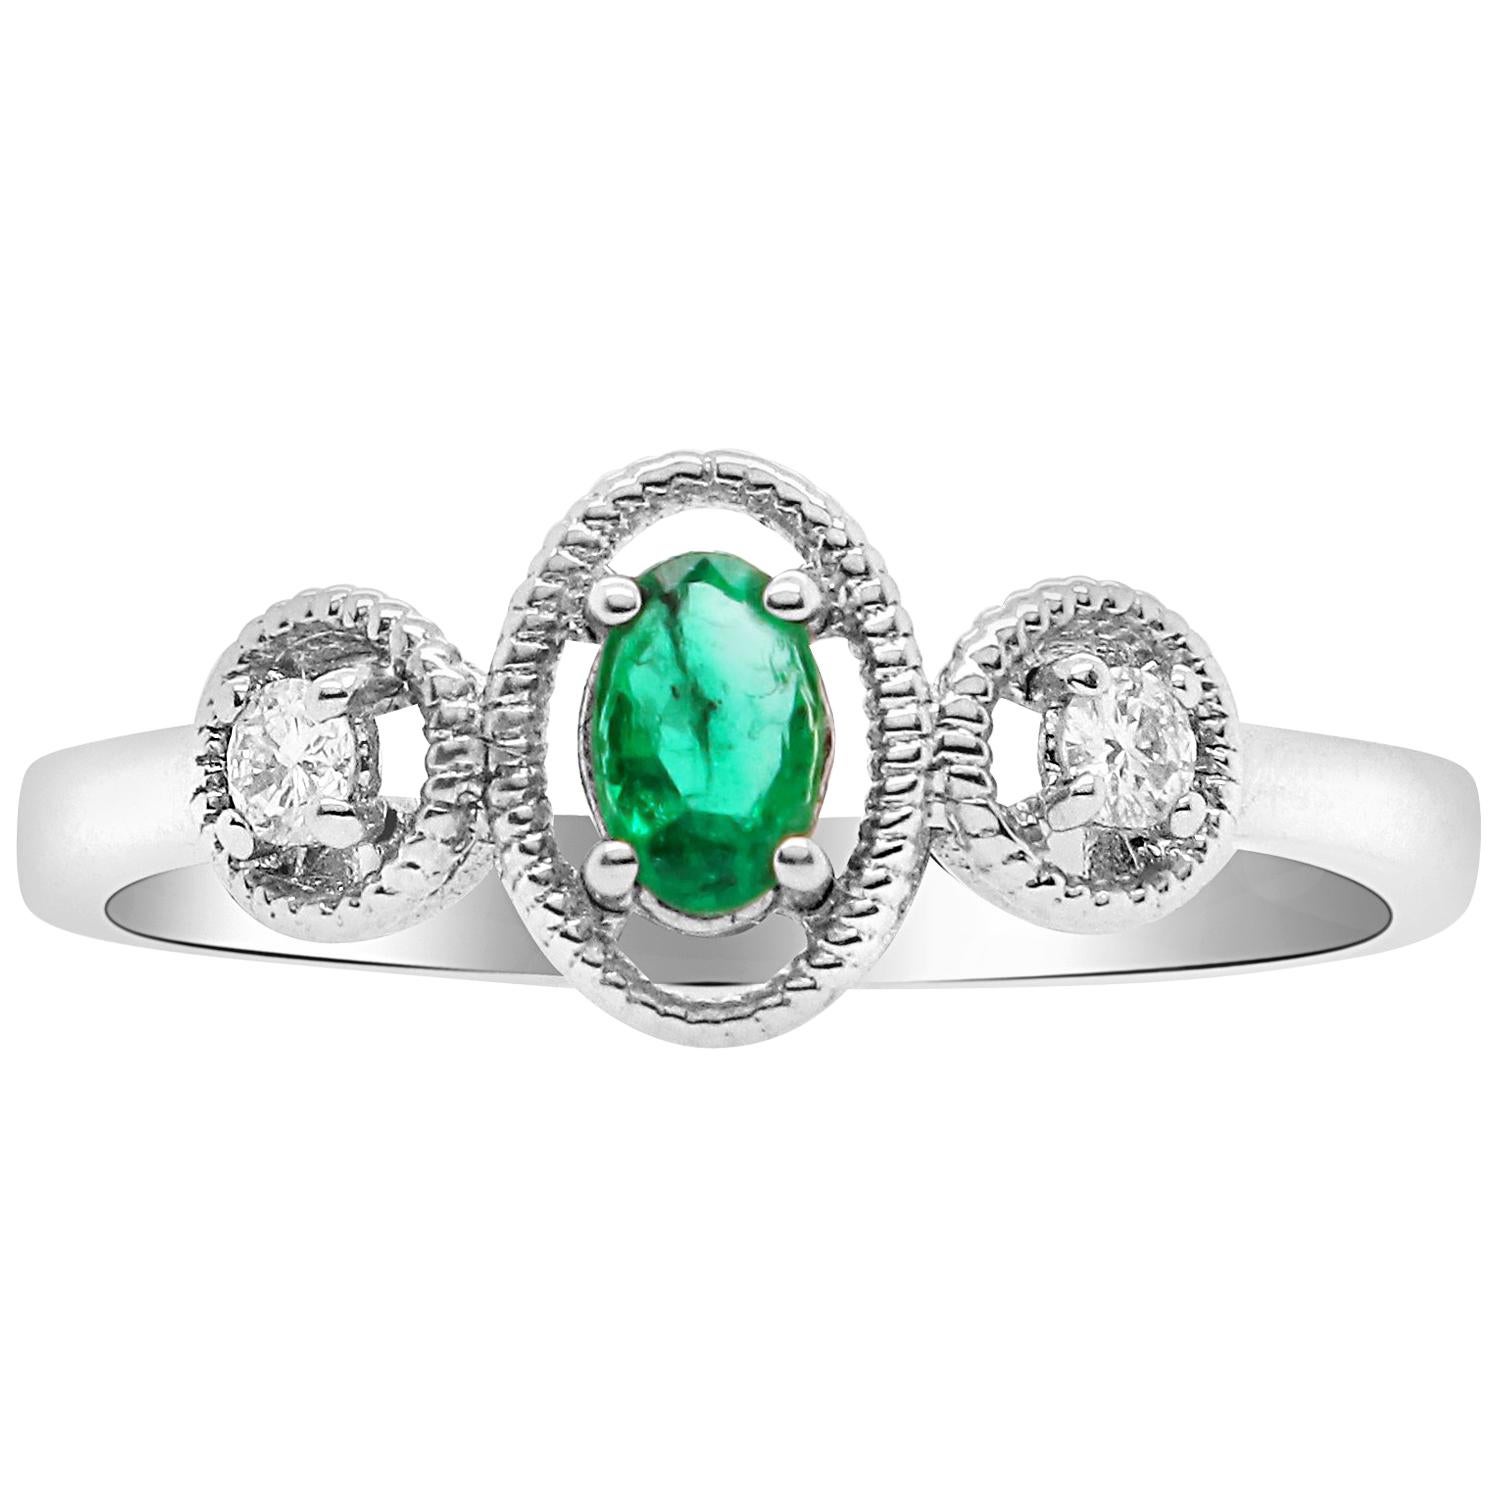 0.21 Carat Oval Emerald and Diamond Ring